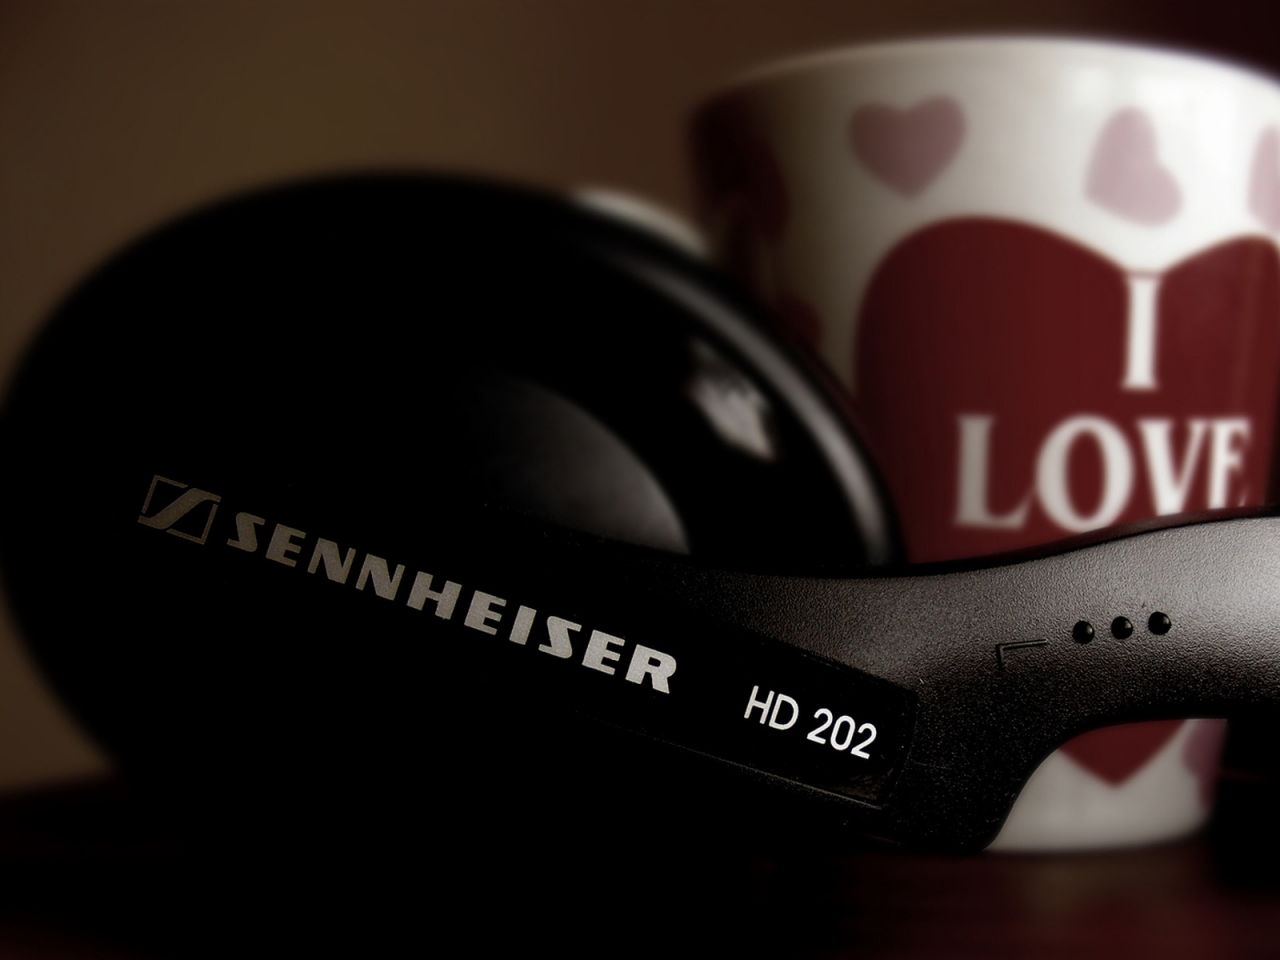 Sennheiser HD 202 for 1280 x 960 resolution